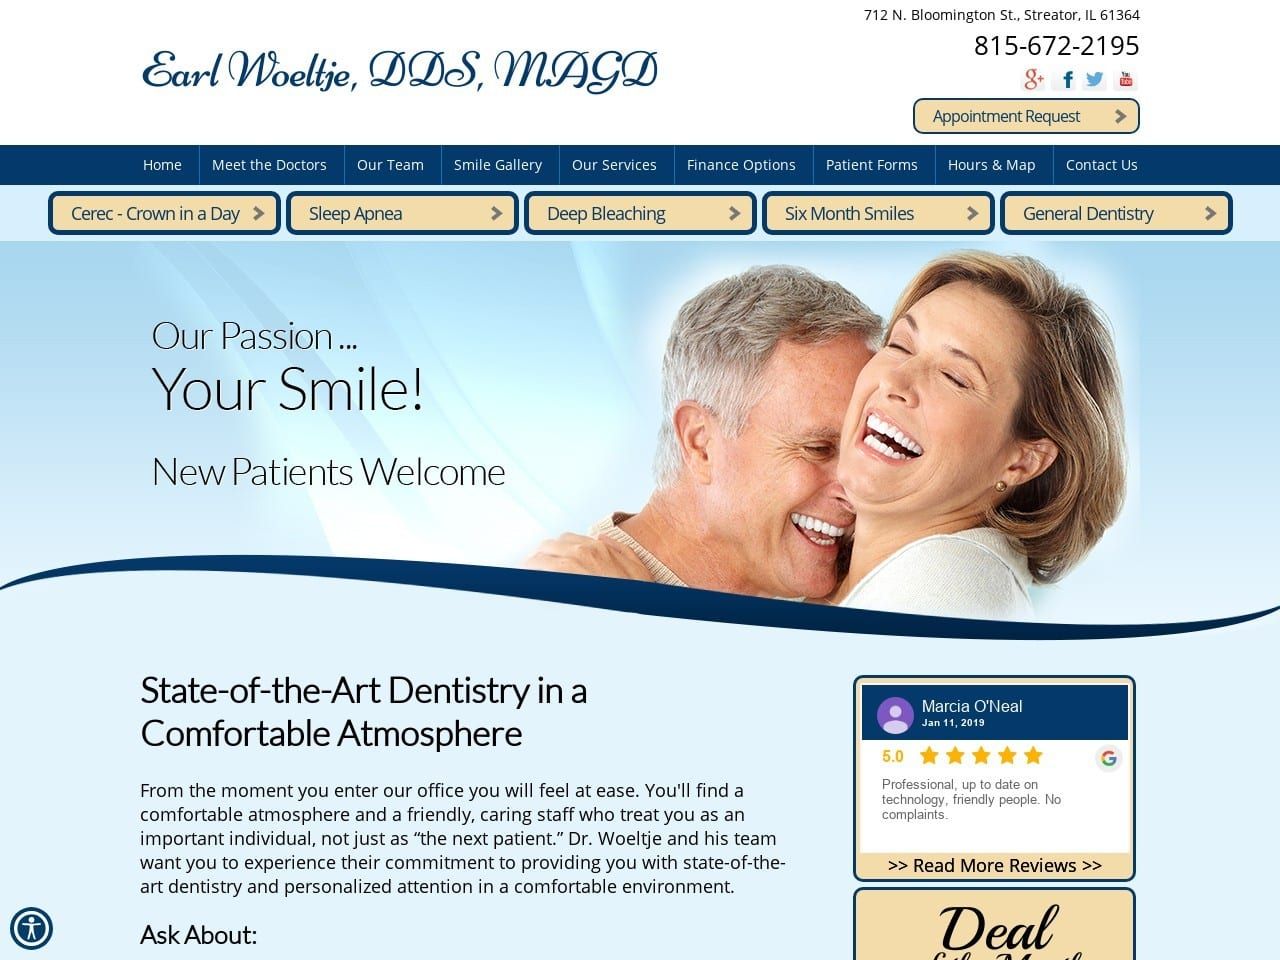 Streator Smiles Website Screenshot from earlismydentist.com